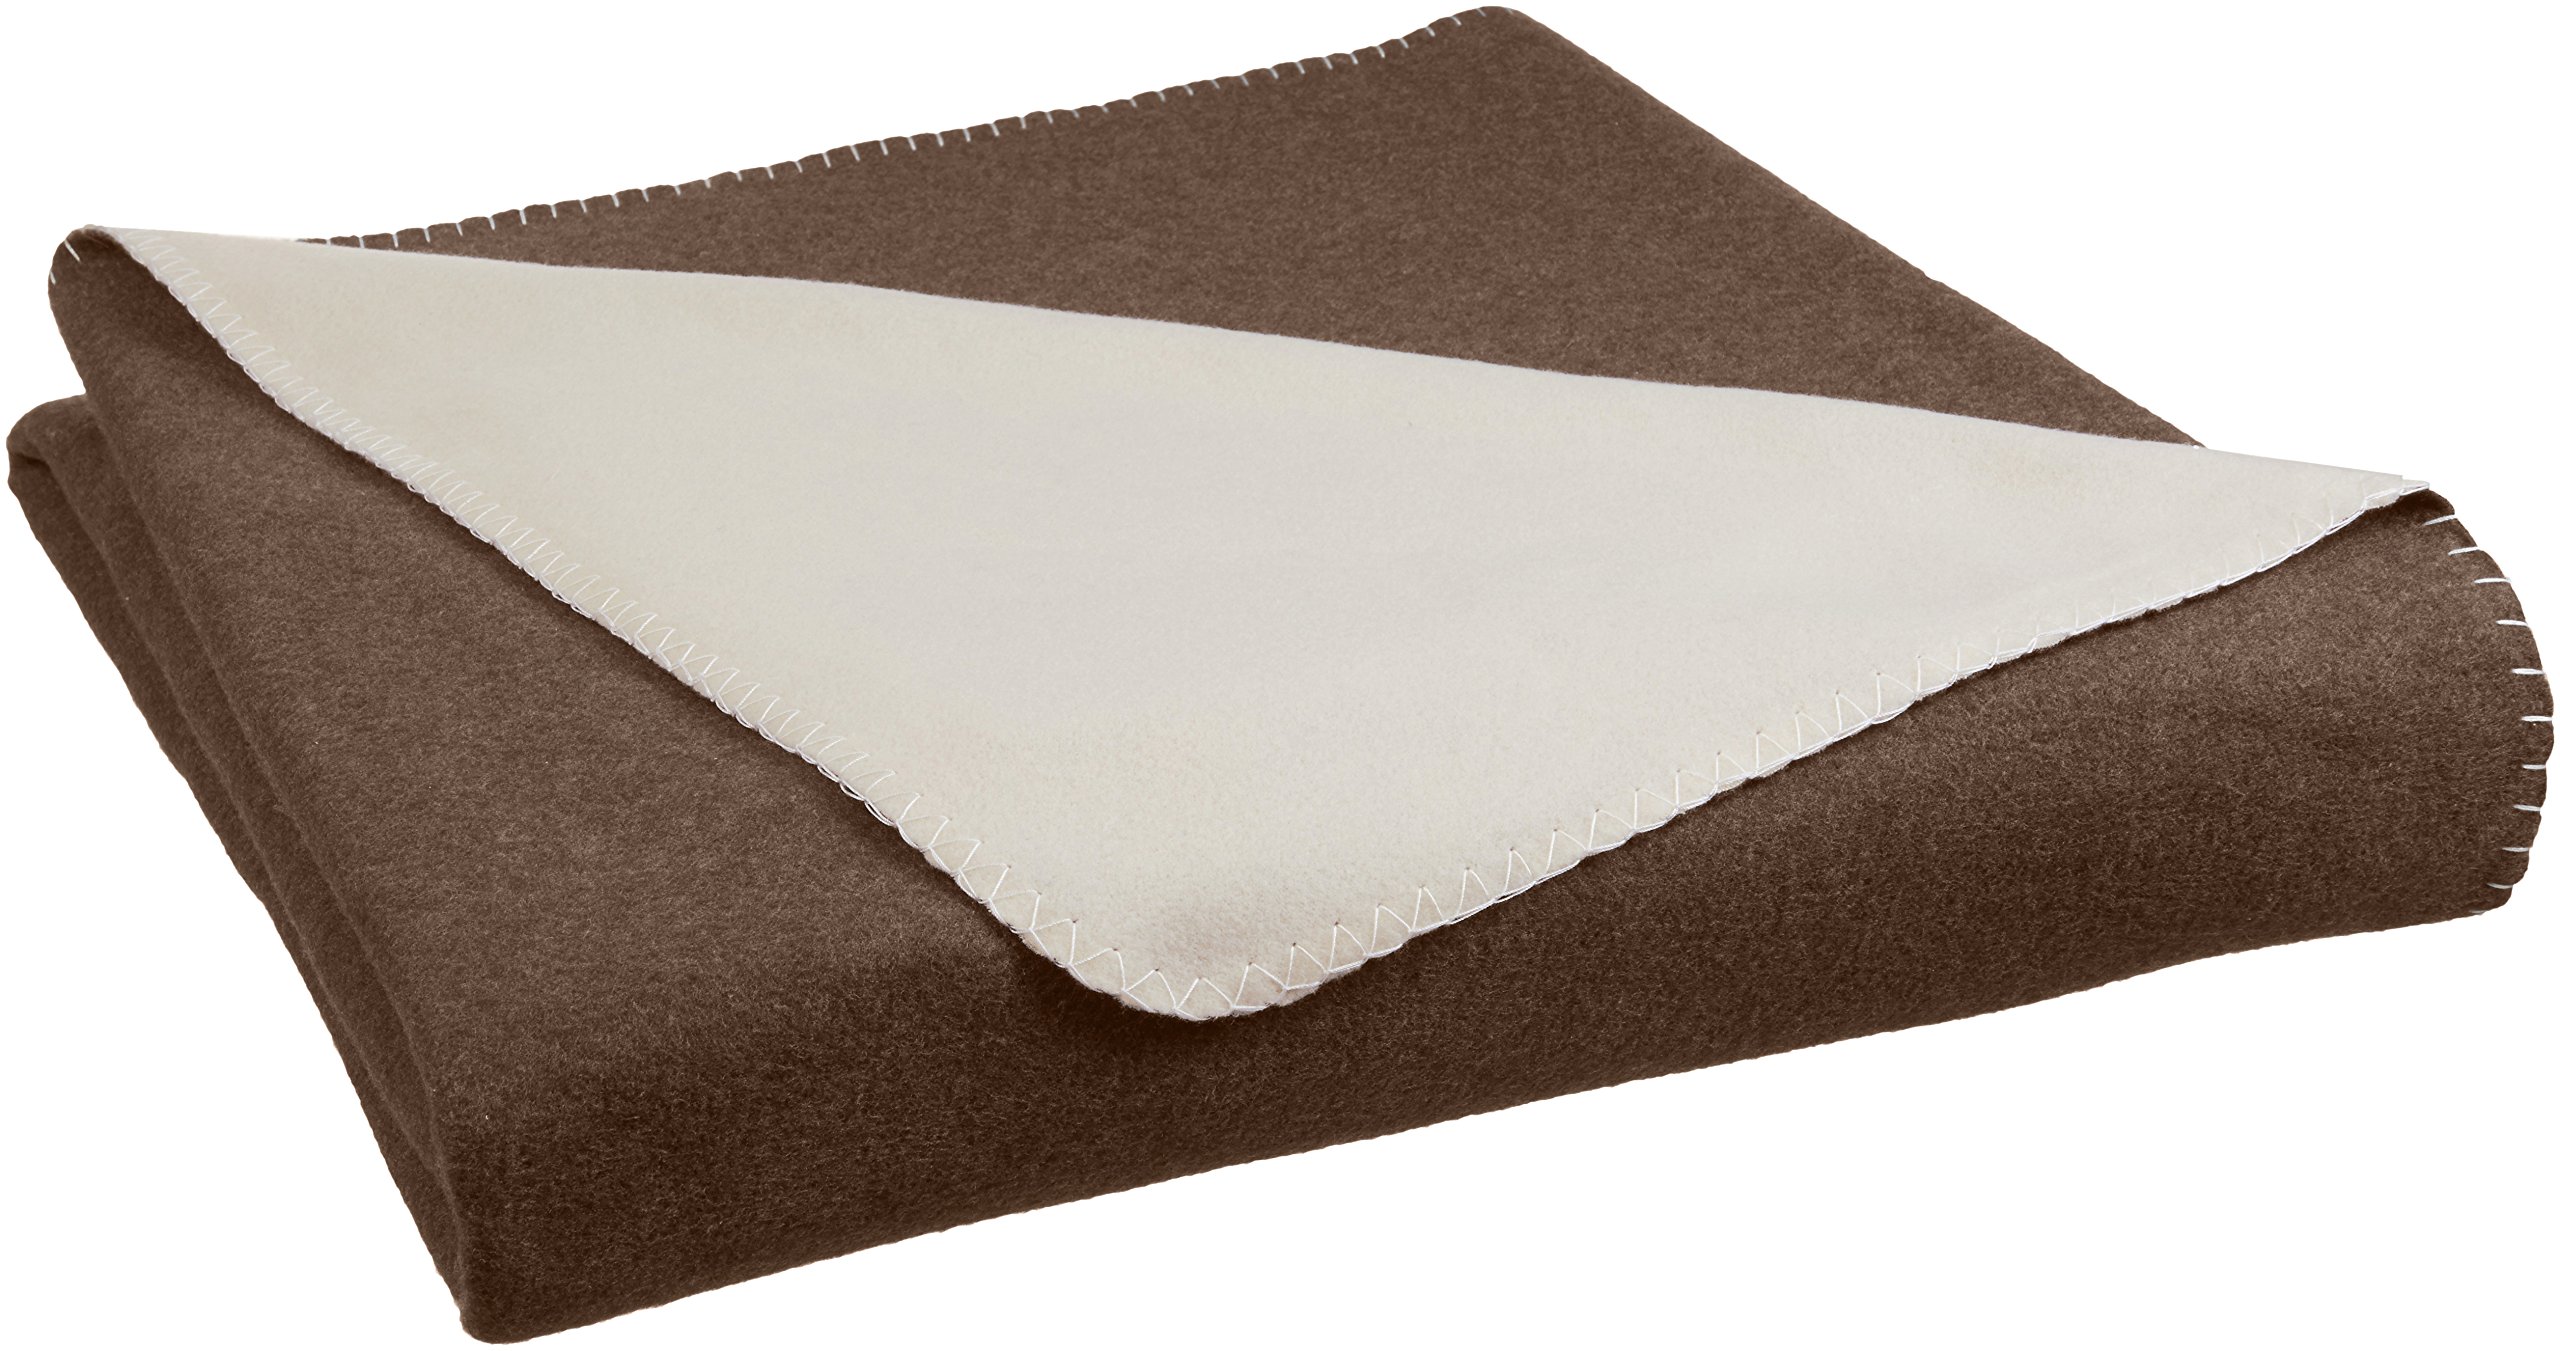 Book Cover Amazon Basics Reversible Fleece Blanket - Twin/Twin XL, Chocolate/Tan